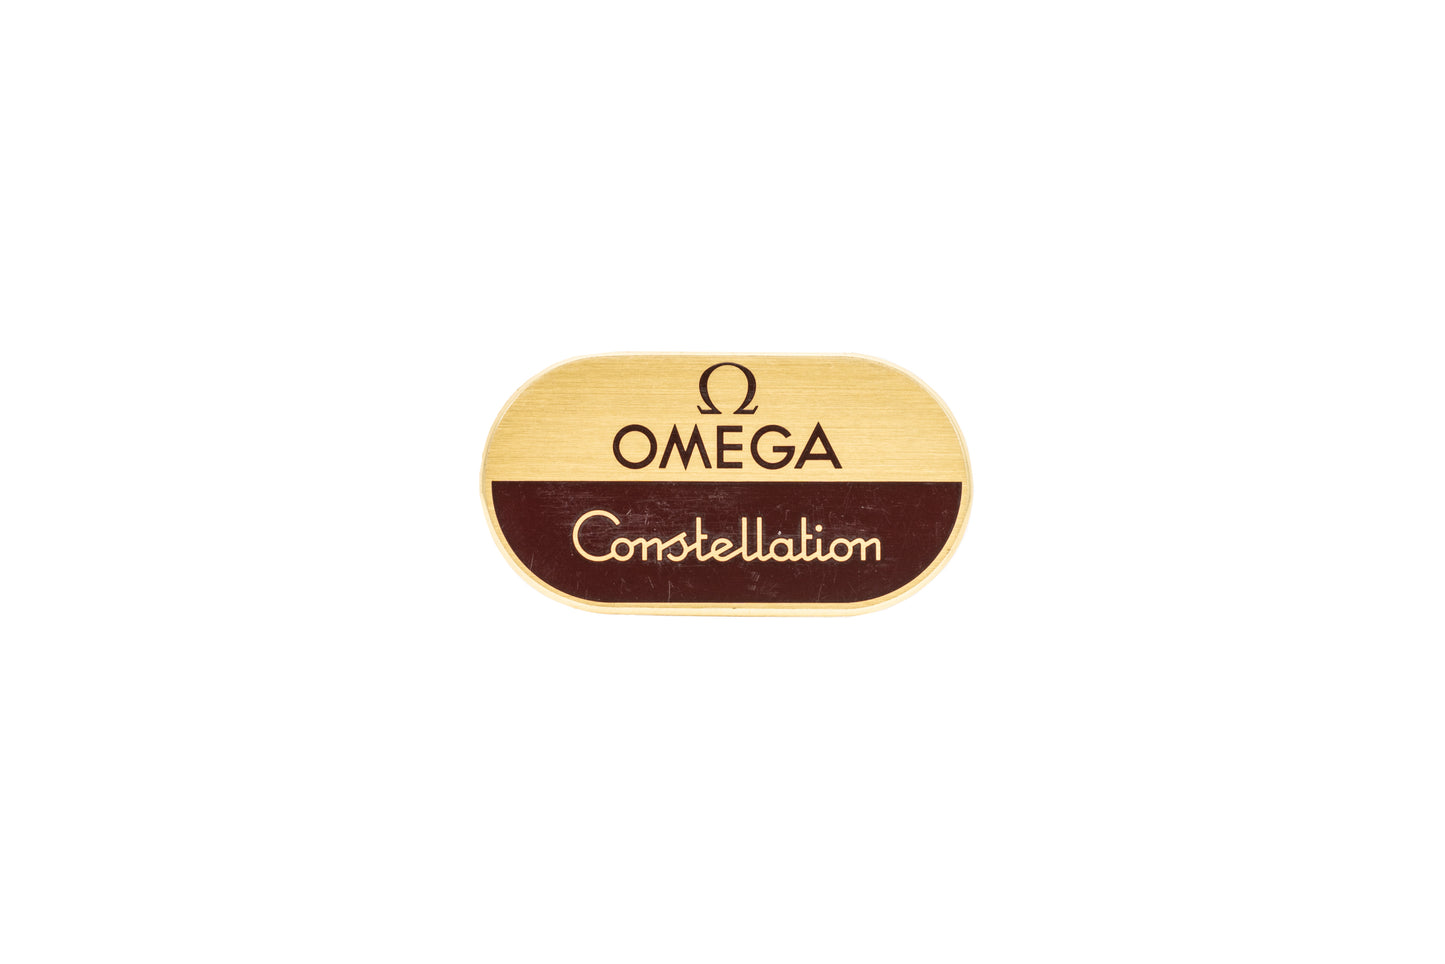 Omega Constellation Signage